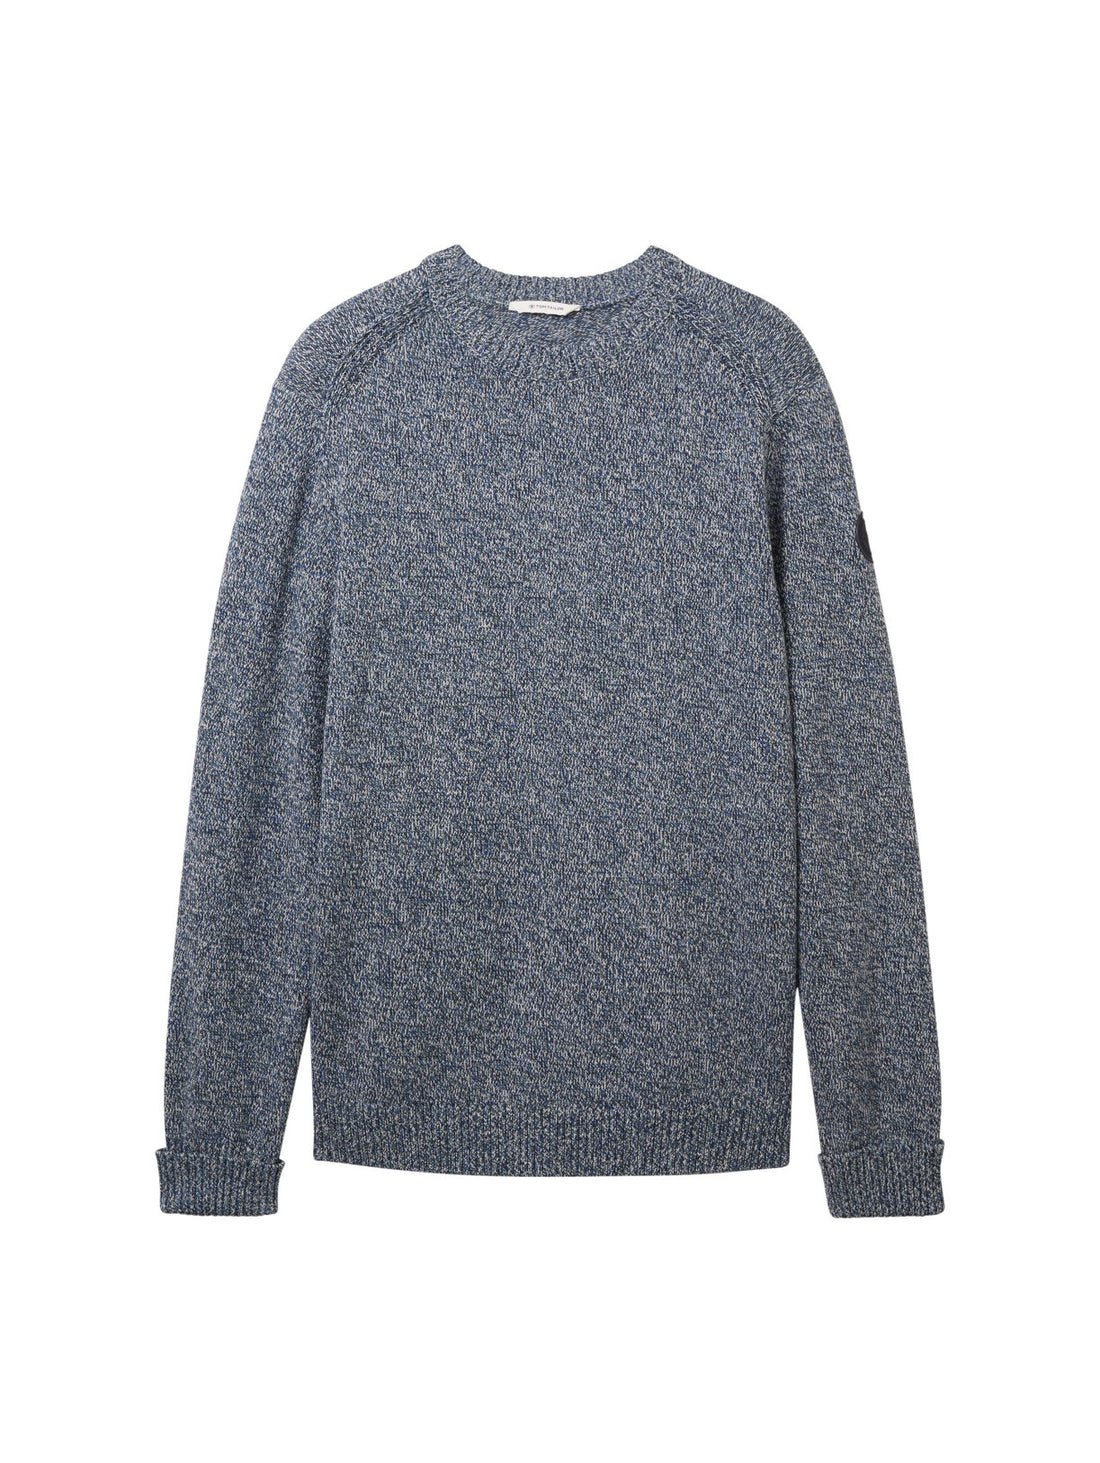 Knitted Sweater With Round Neckline_1038246_32741_01